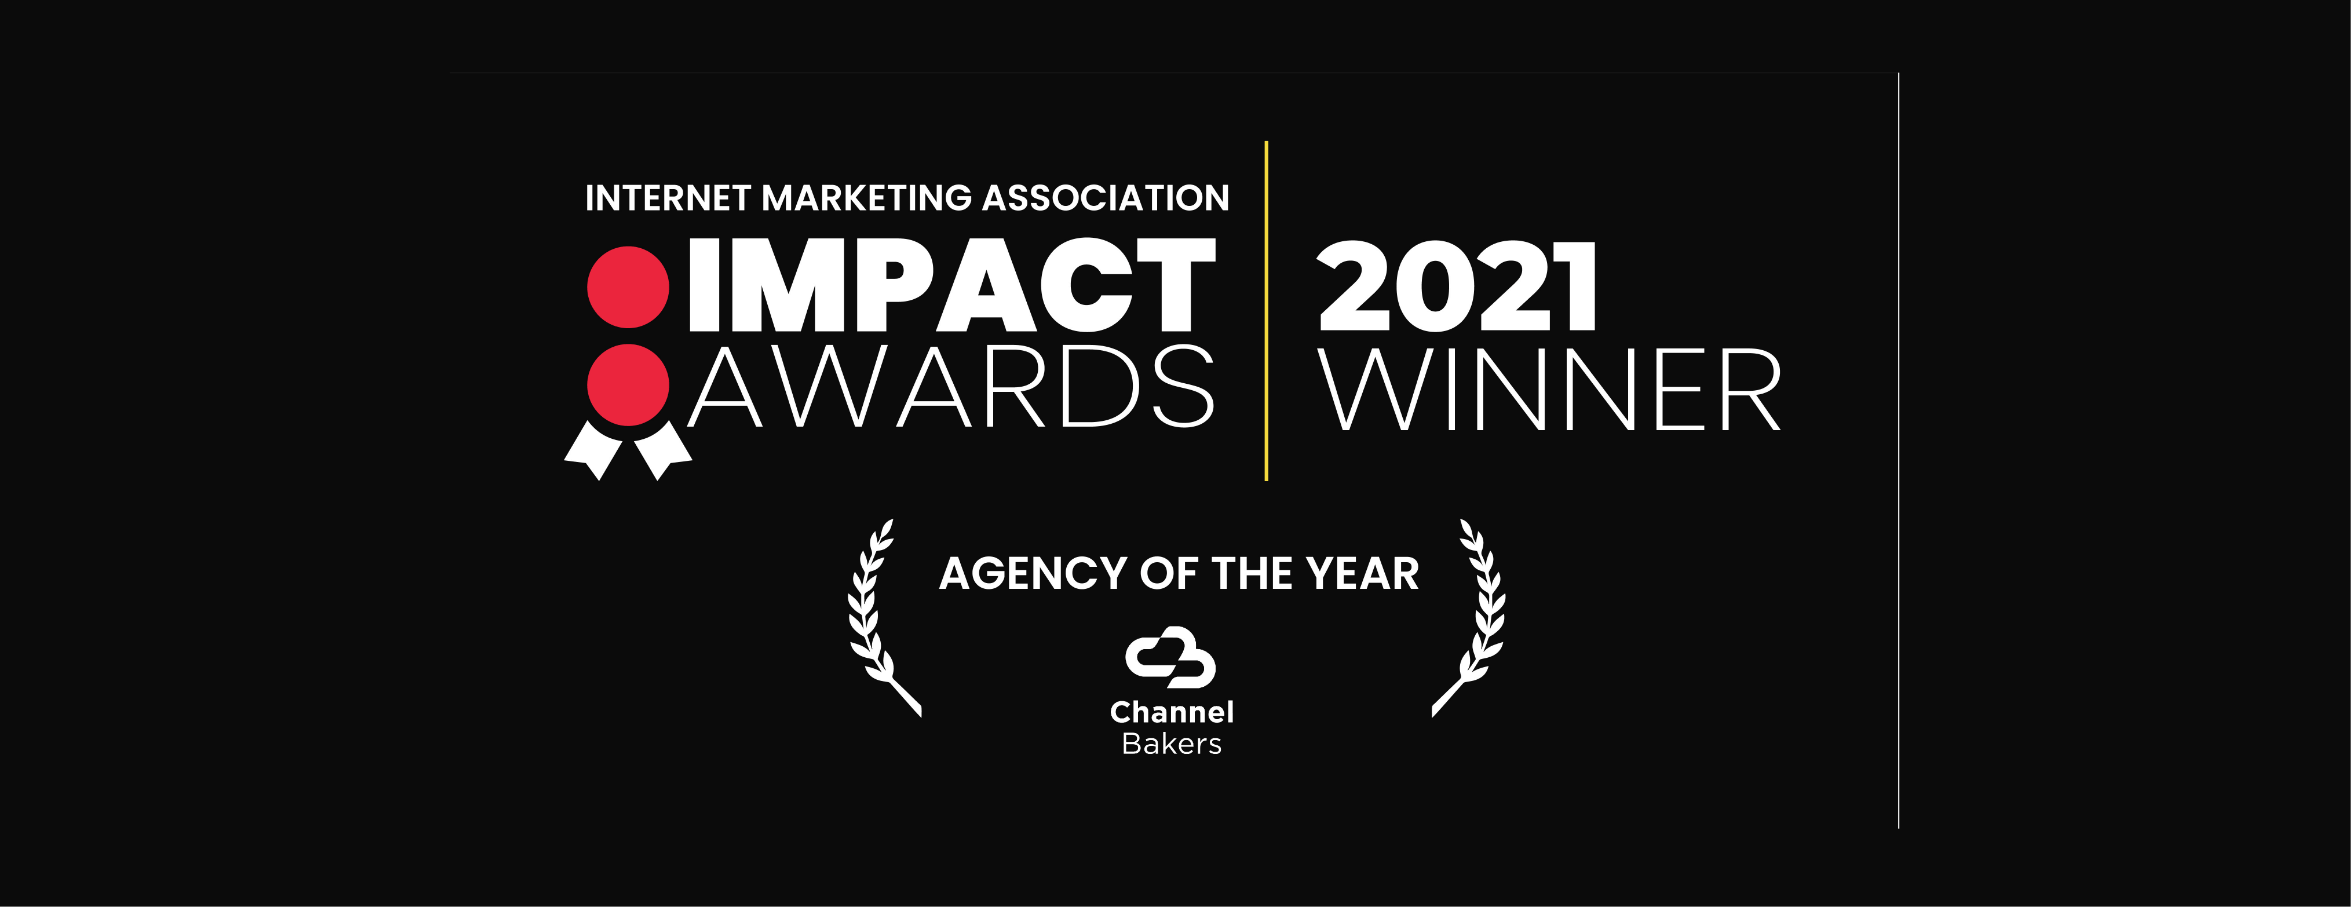 Impact Awards 2021